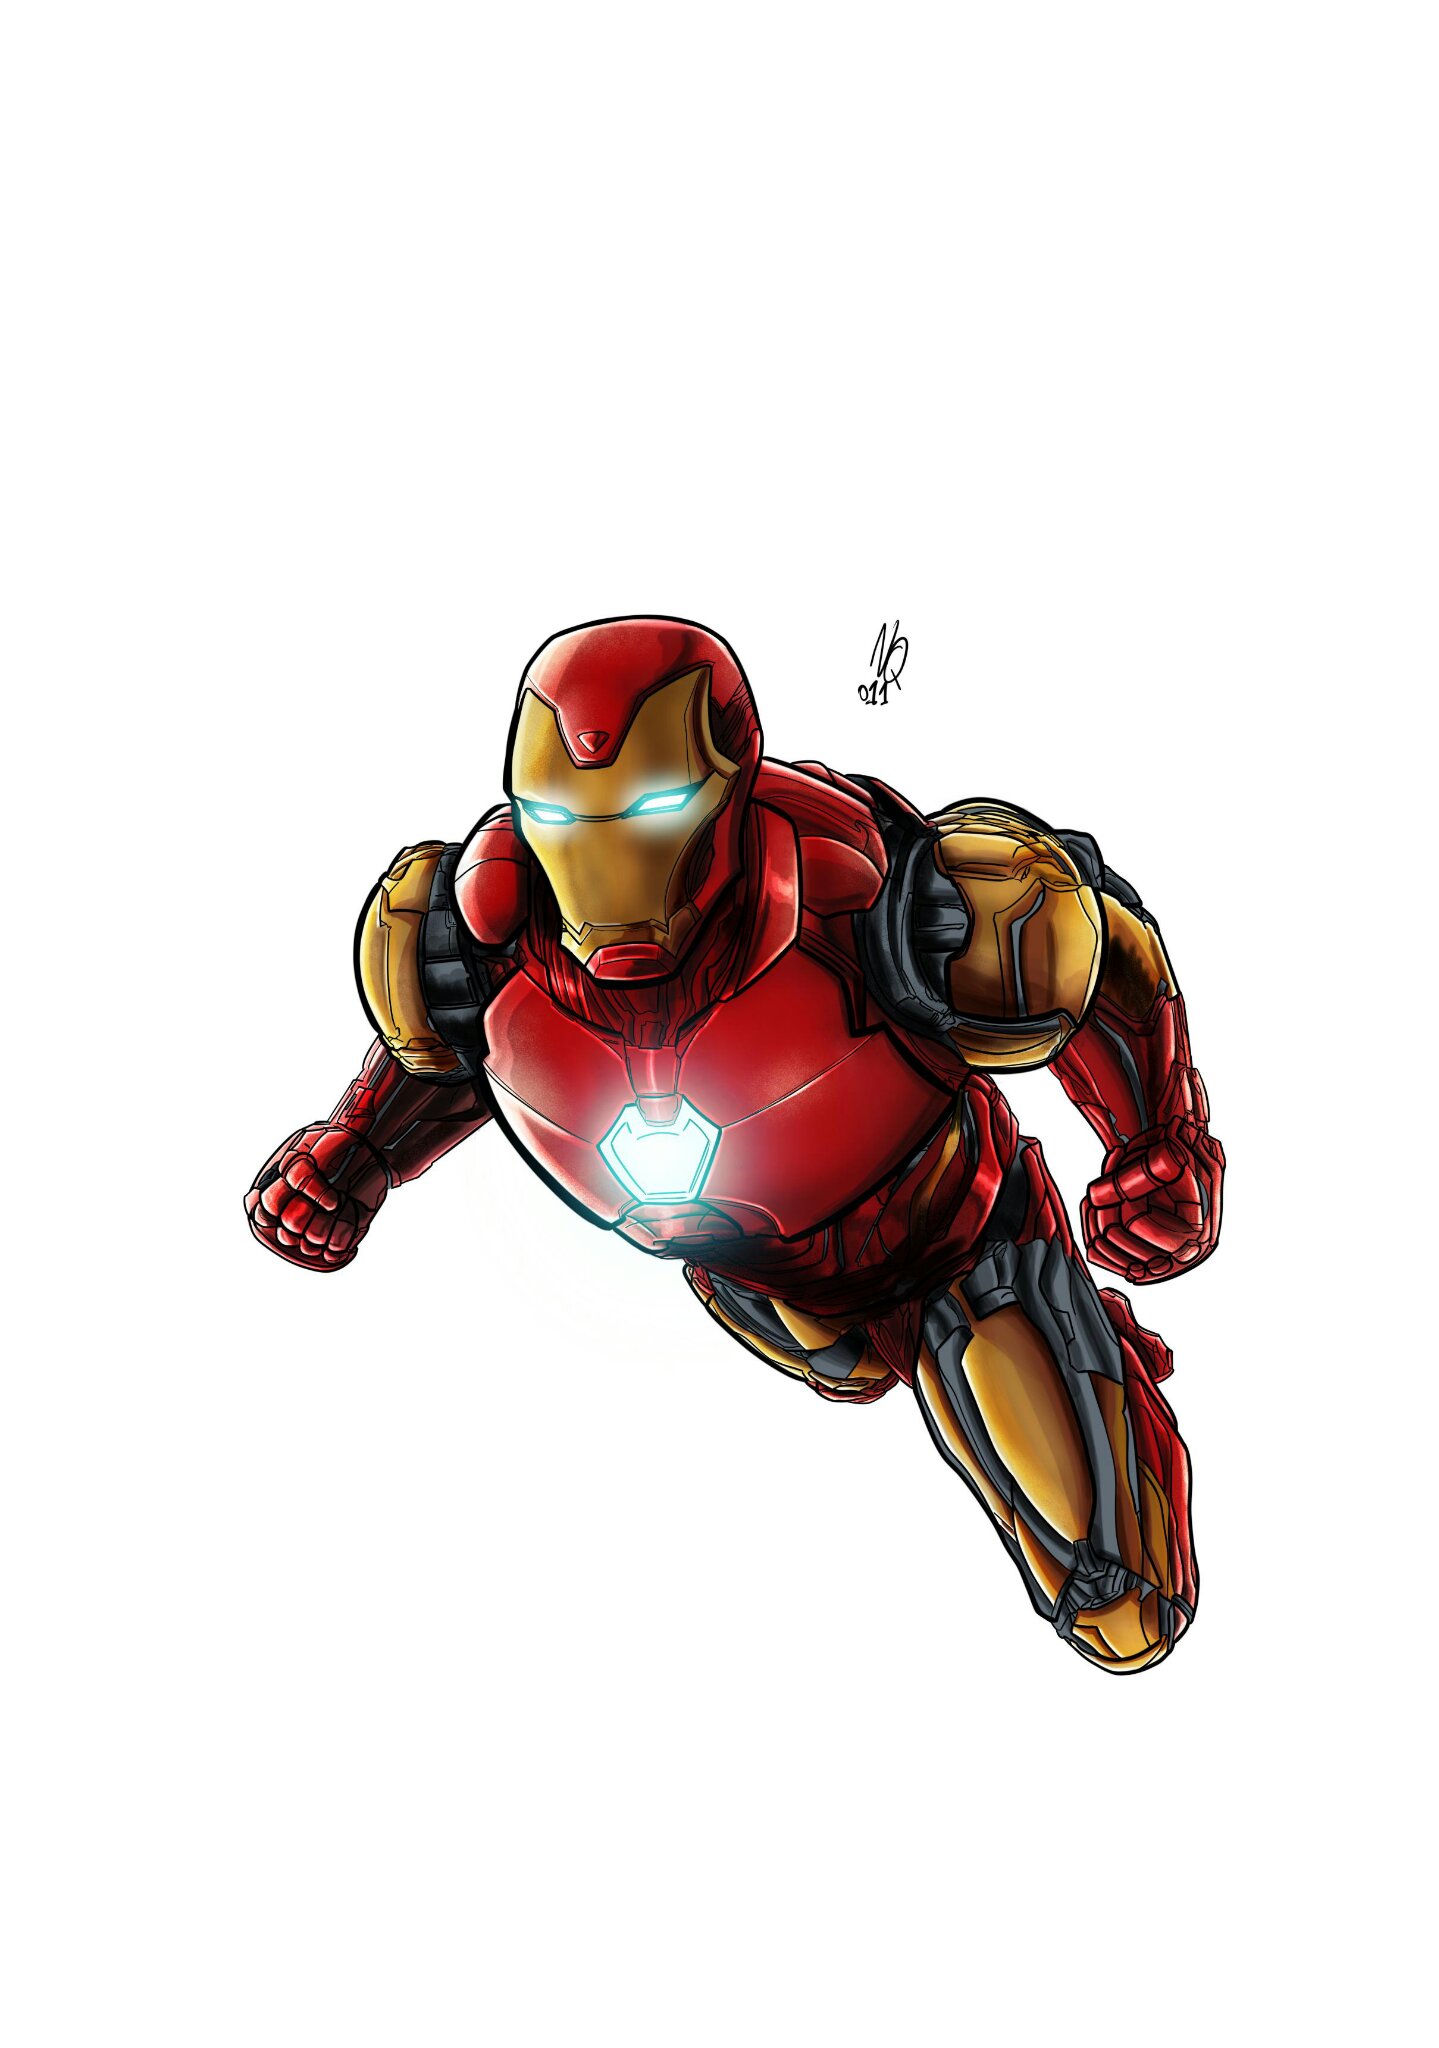 Iron Man fly Drawing free image download